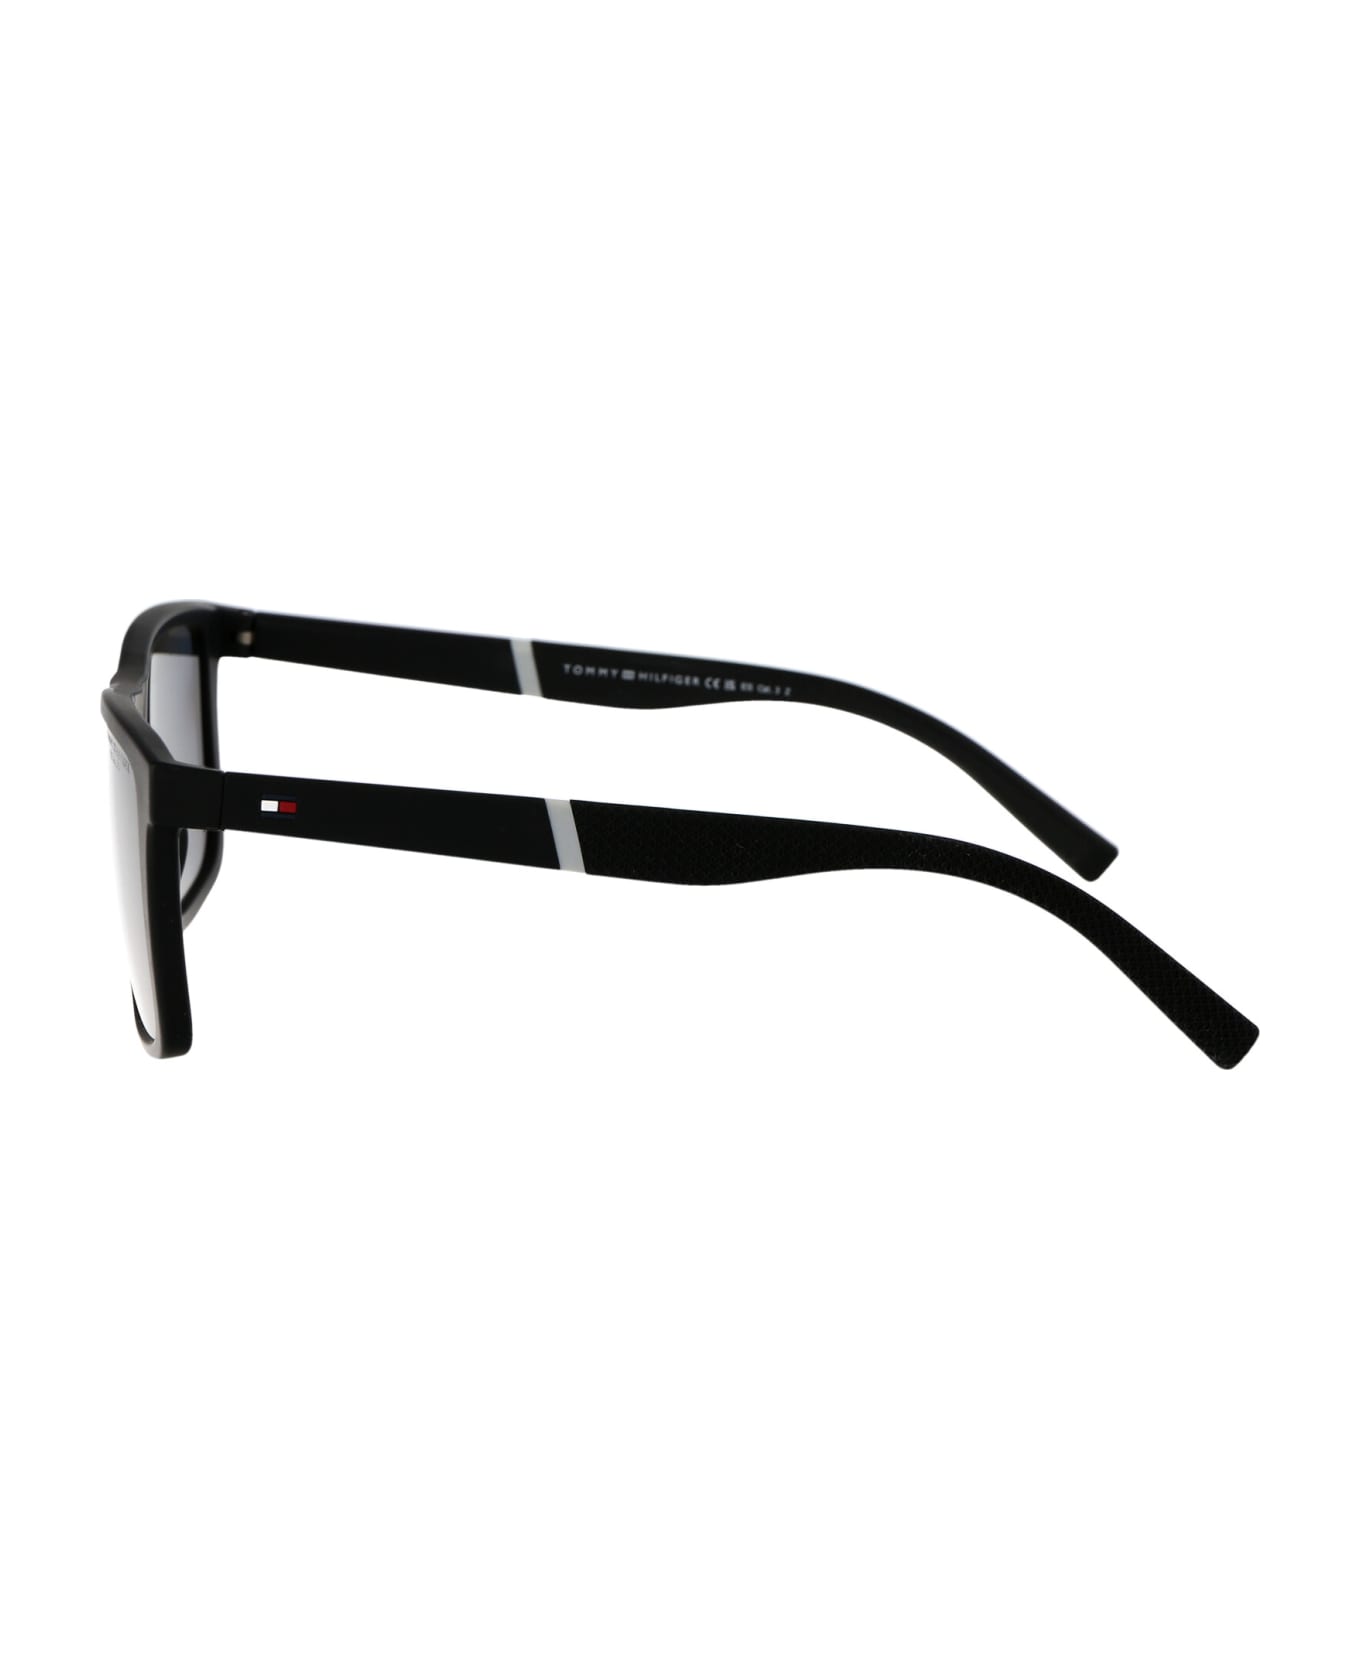 Tommy Hilfiger Th 2043/s Sunglasses - 003M9 MATTE BLACK